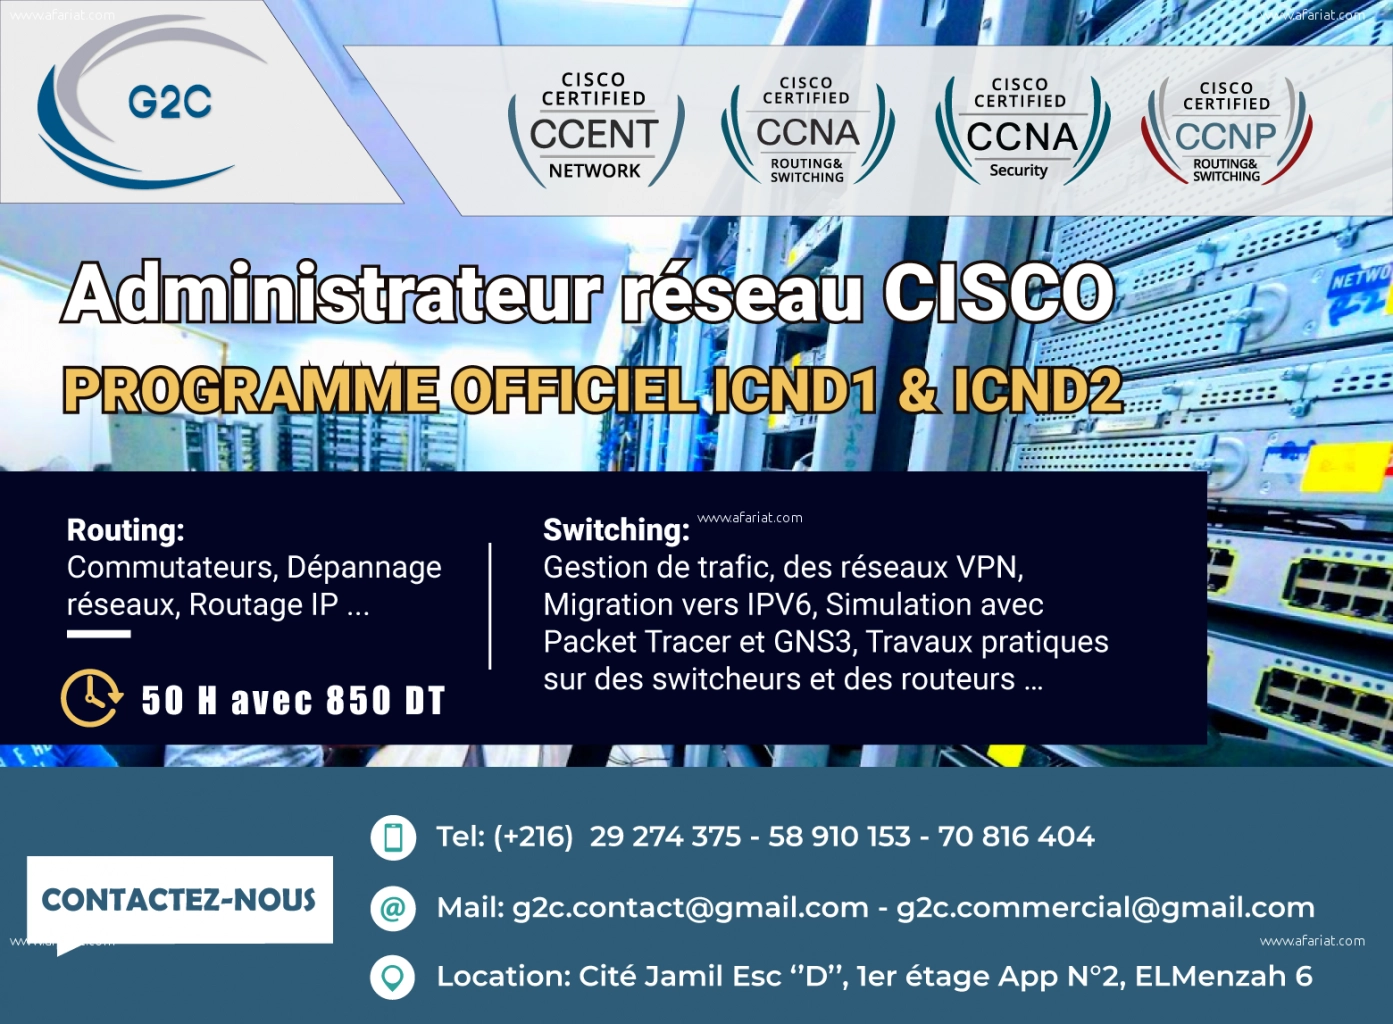 Certification CISCO CCNA Associate